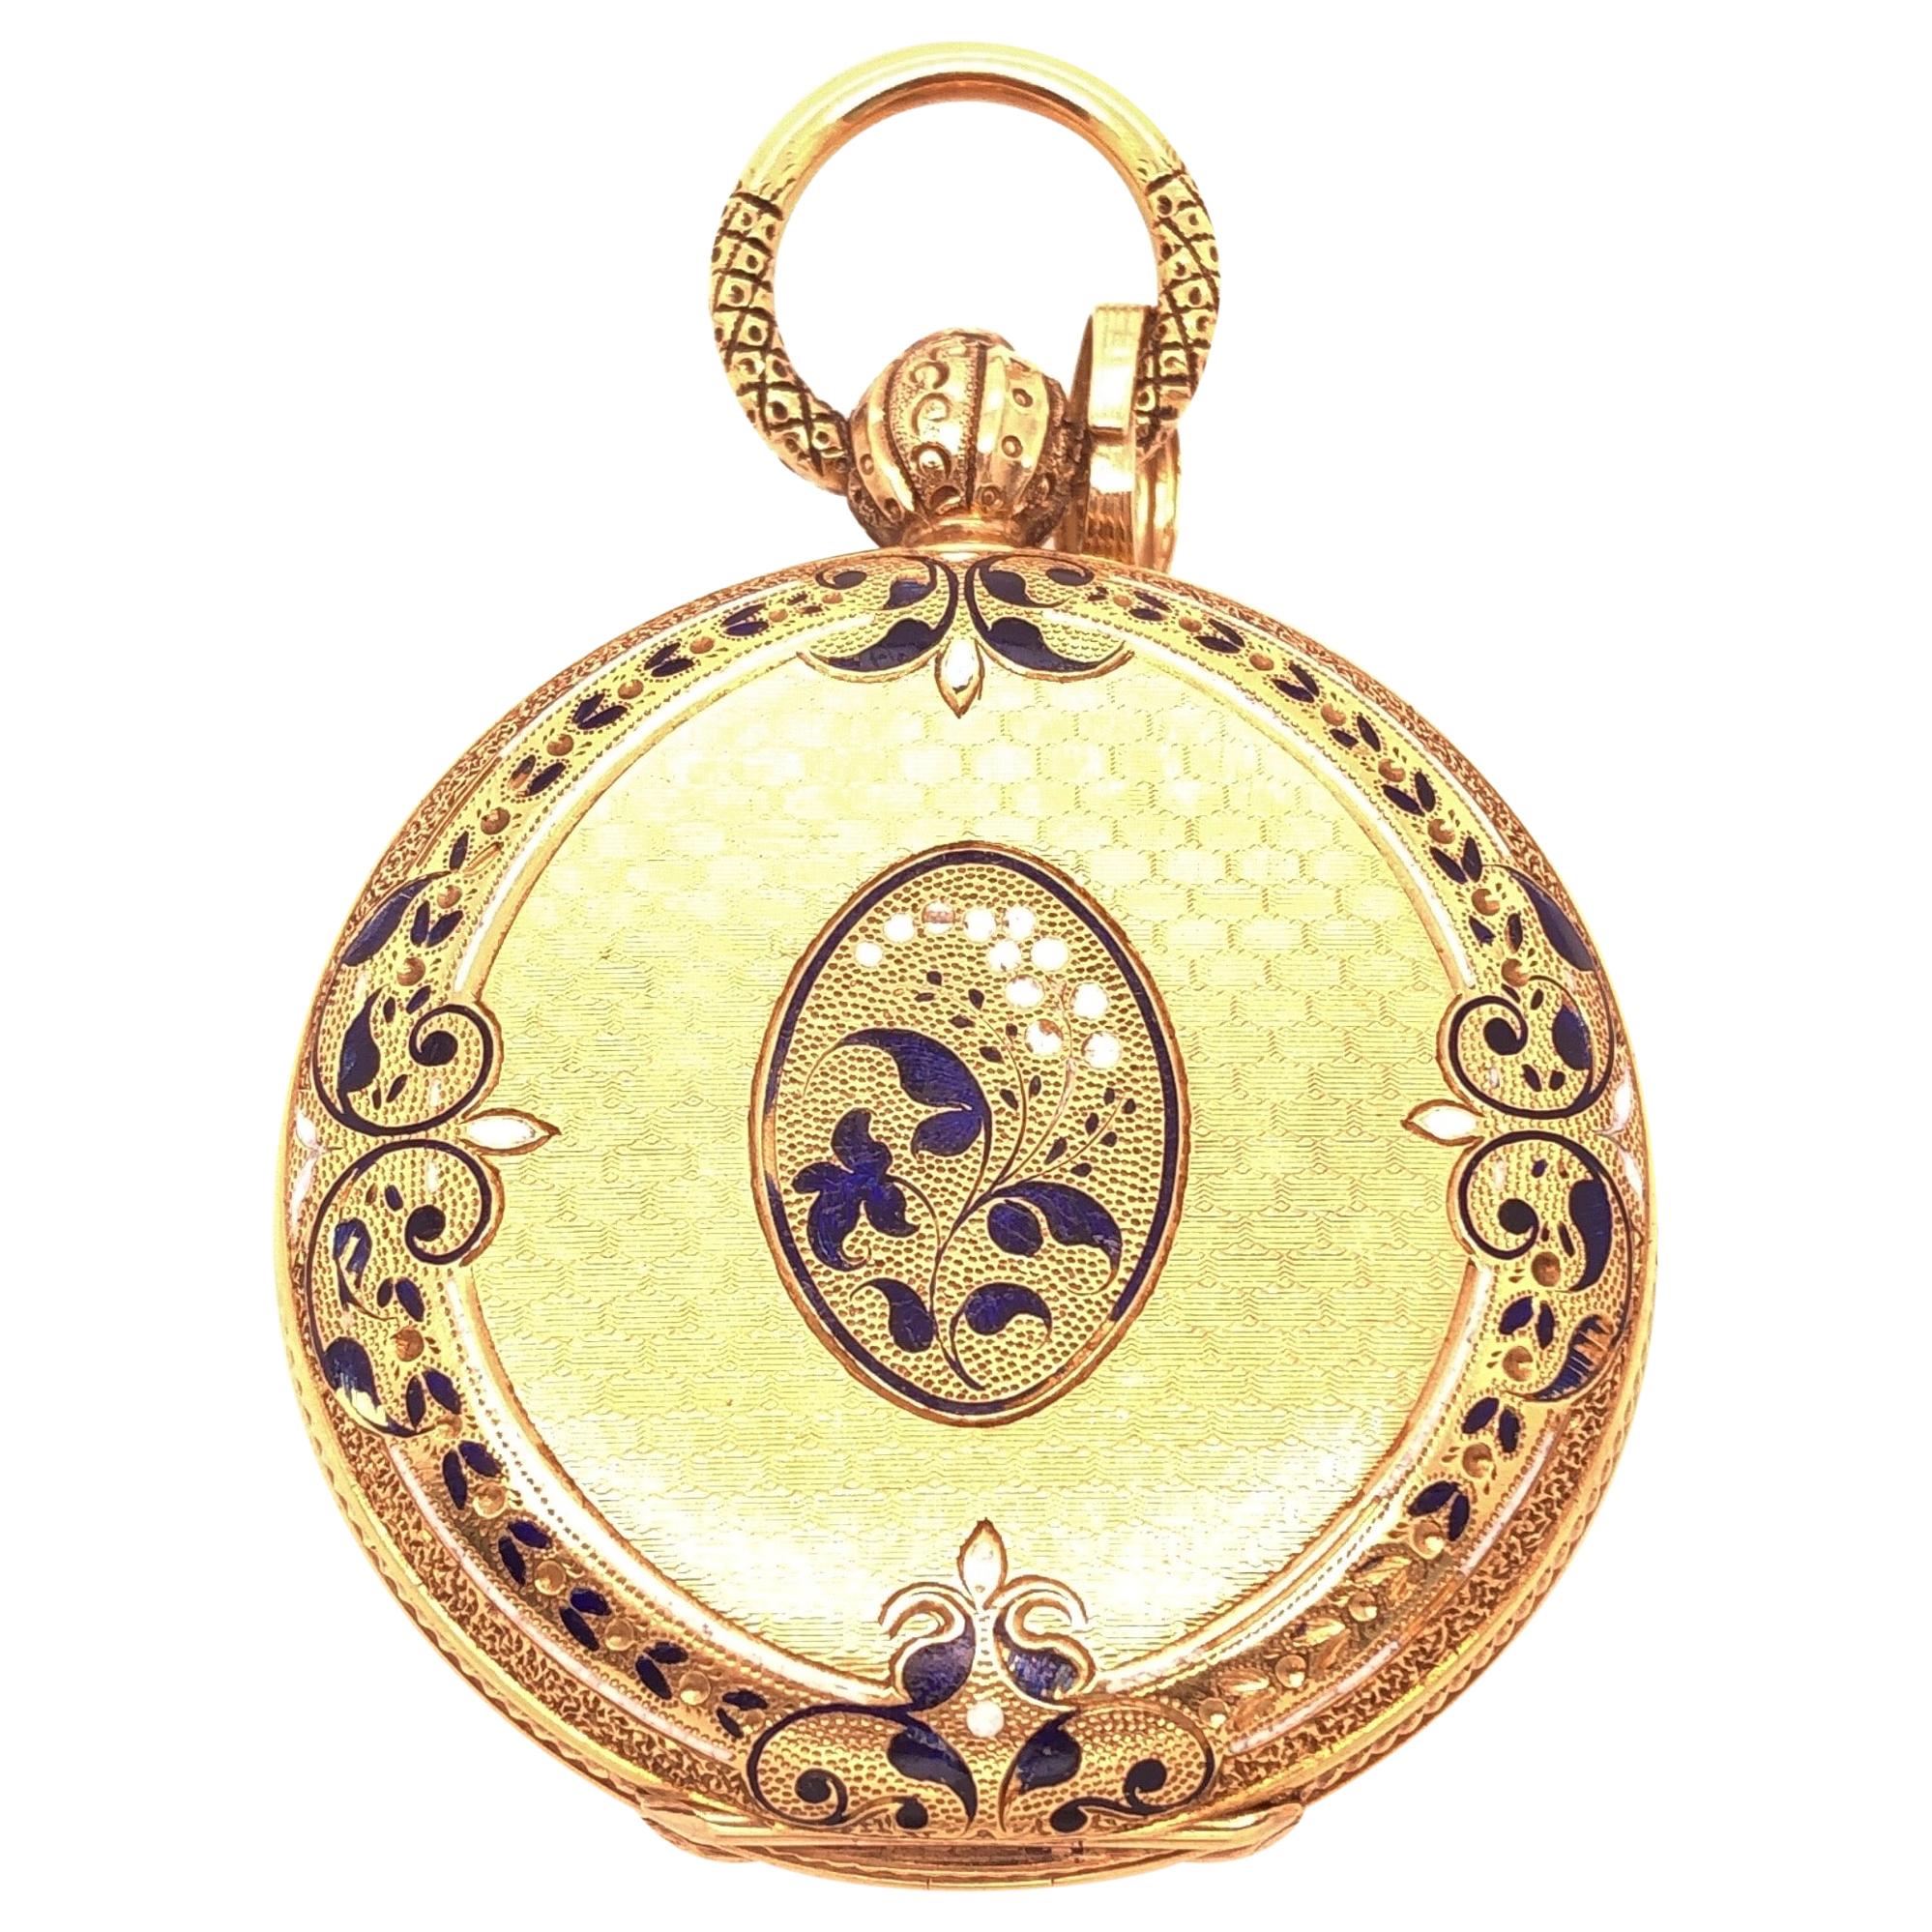 18 Karat Yellow Gold Antique Breguet Paris Pocket Watch with Porcelain Dial